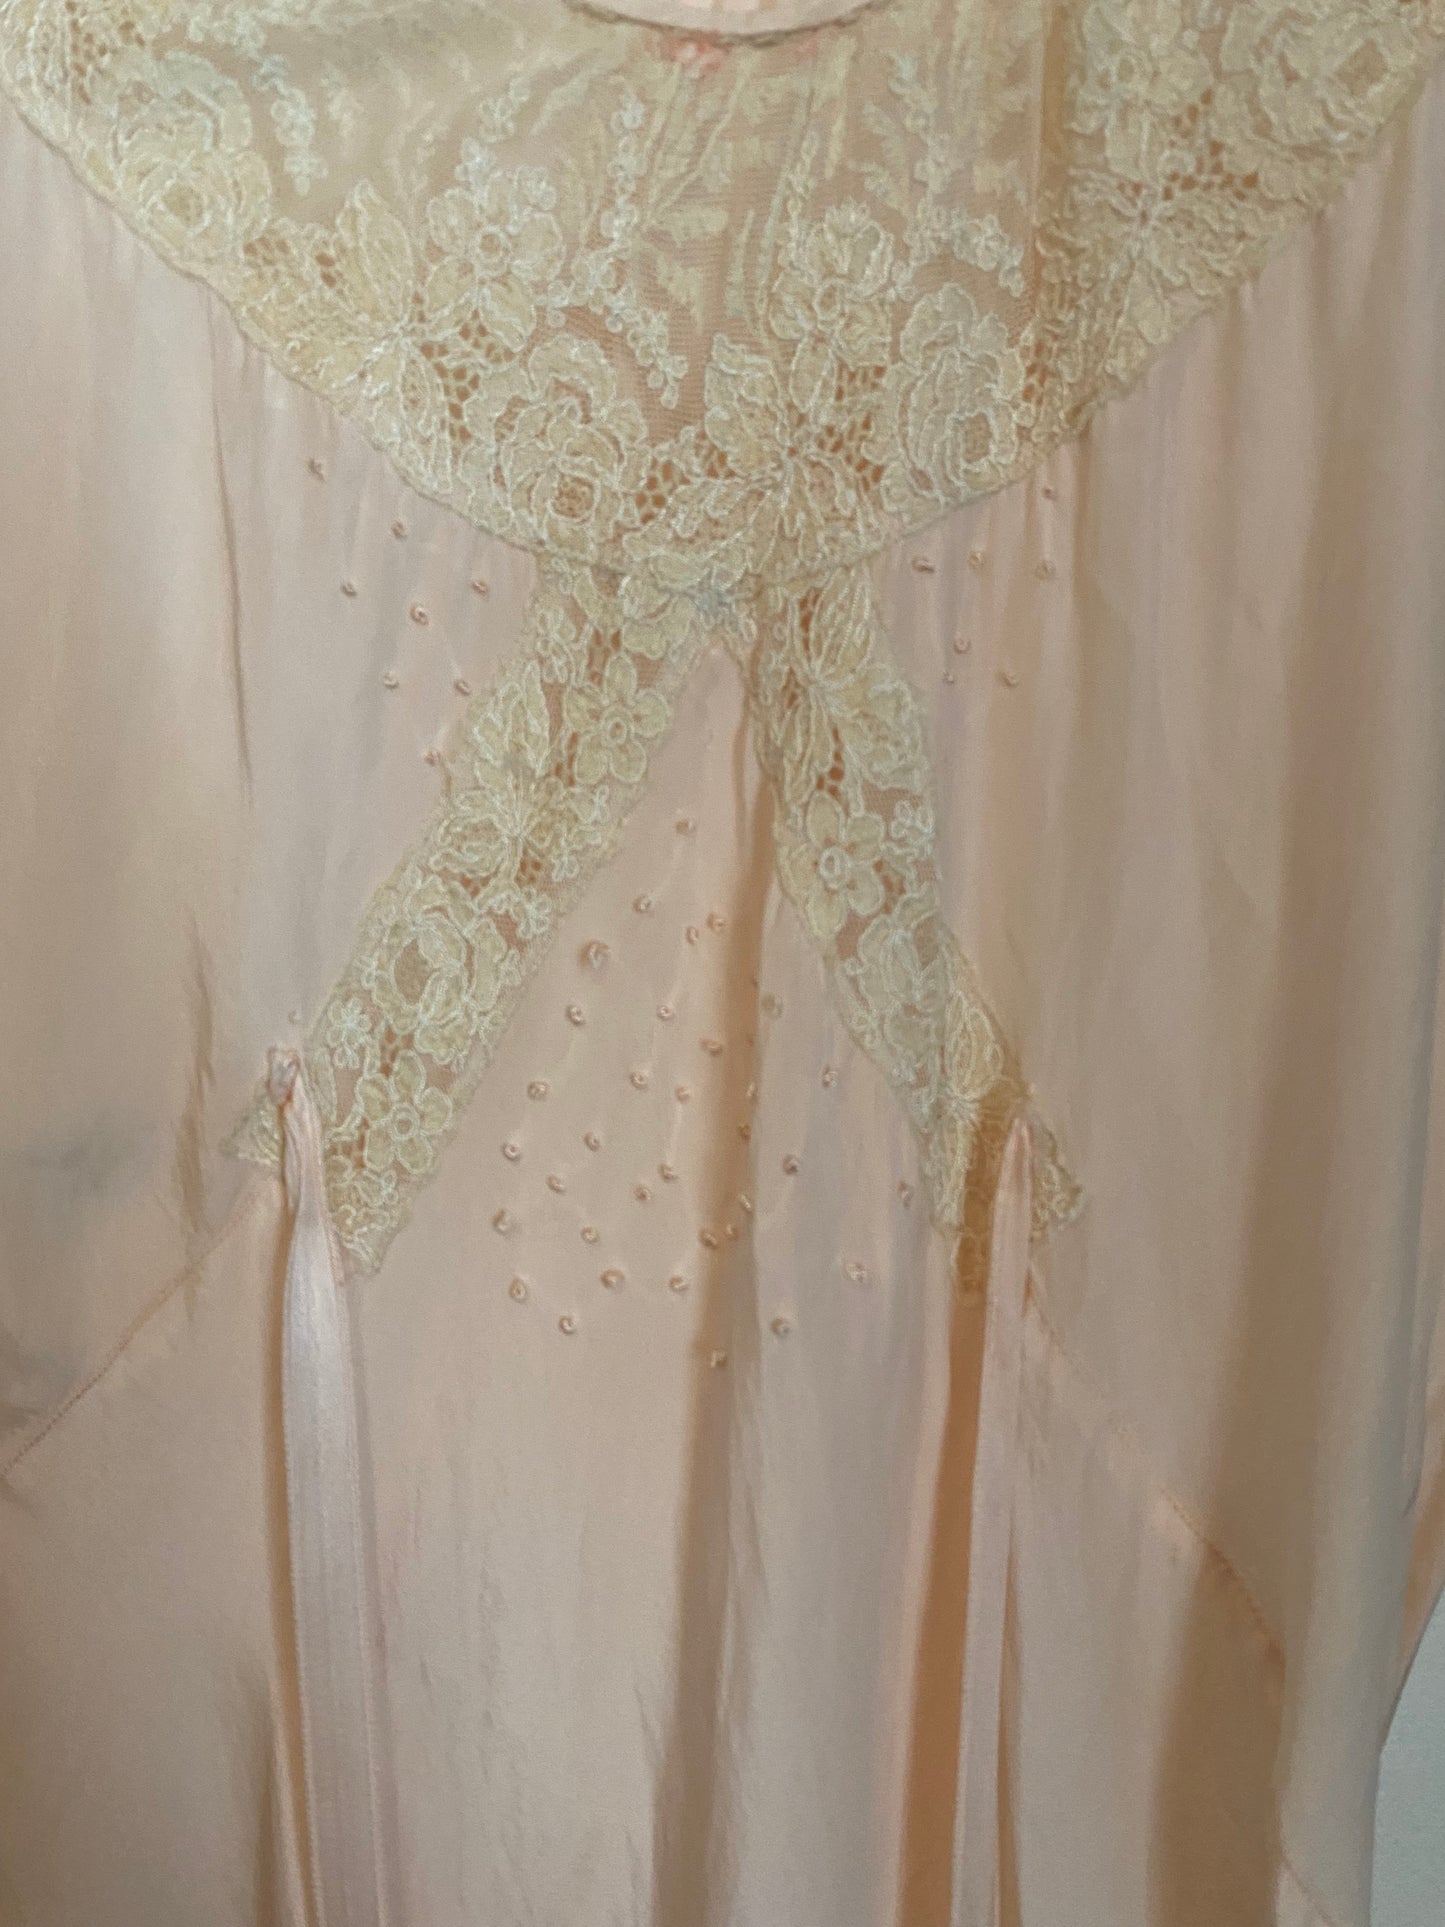 1940s Pale Pink Bias Cut Slip w/ Lace Embroidery- M/L